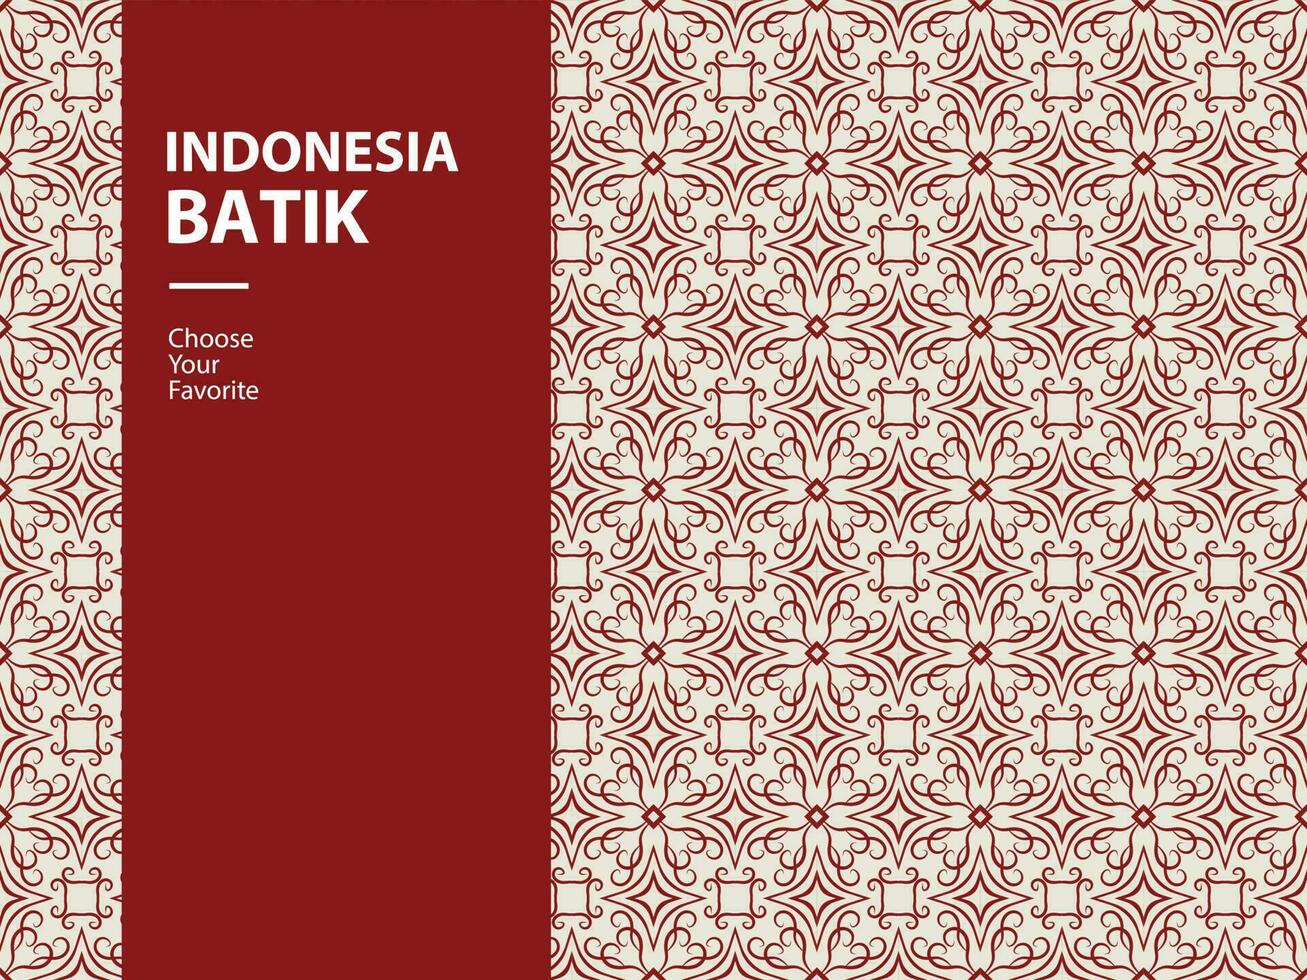 batik mönster sömlös indonesien element oberoende dag nationell teckning årgång mode vektor